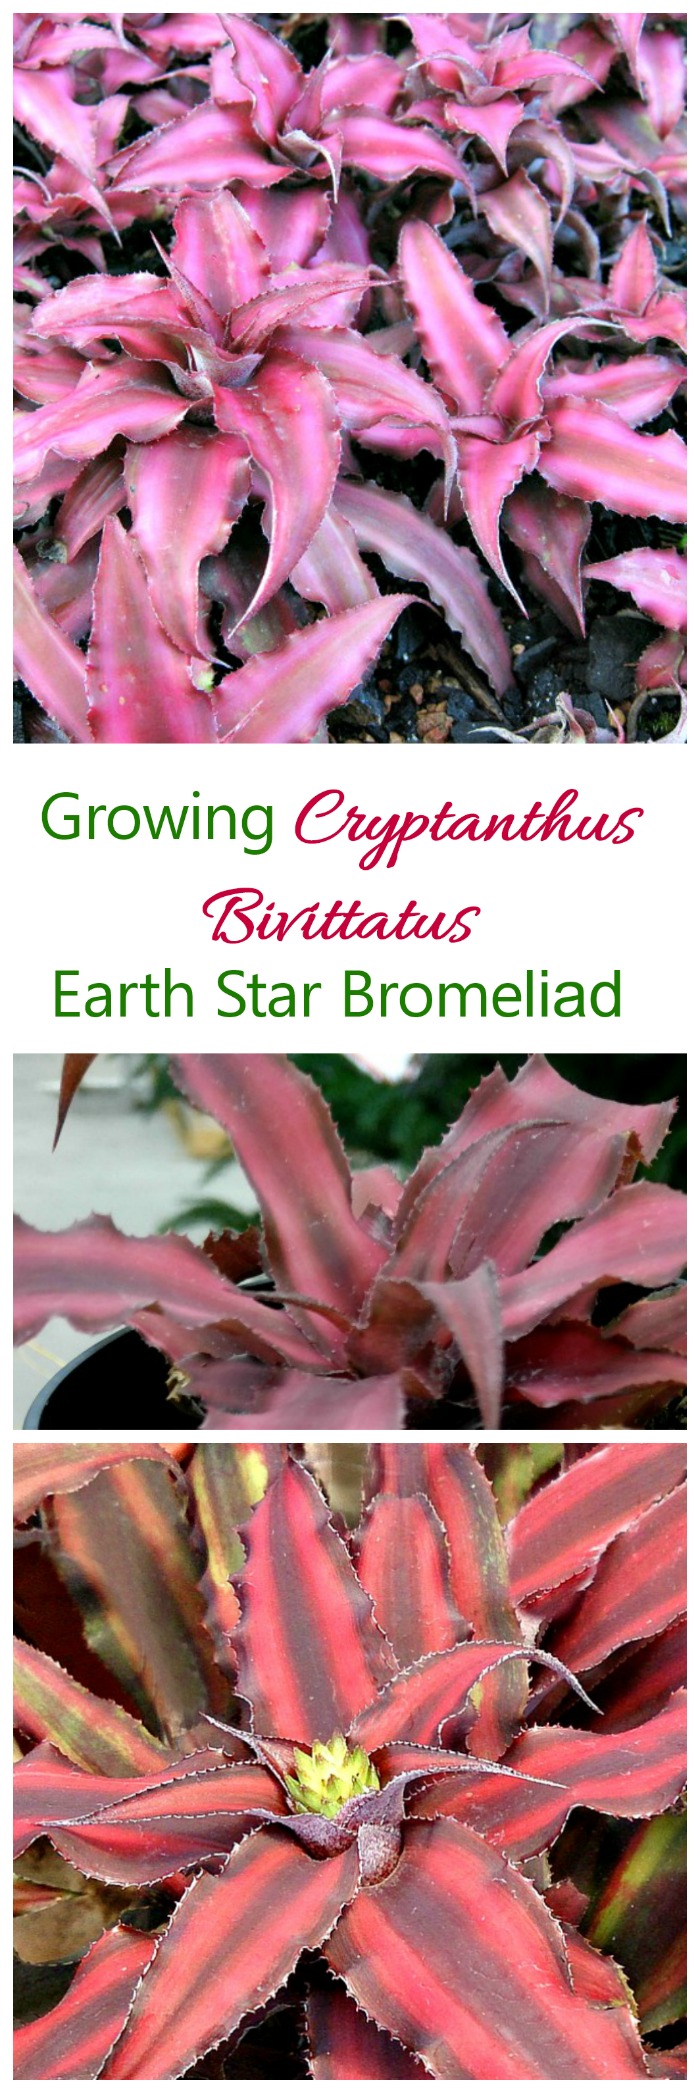 Cryptanthus Bivittatus - වර්ධනය වන පෘථිවි තරුව Bromeliad